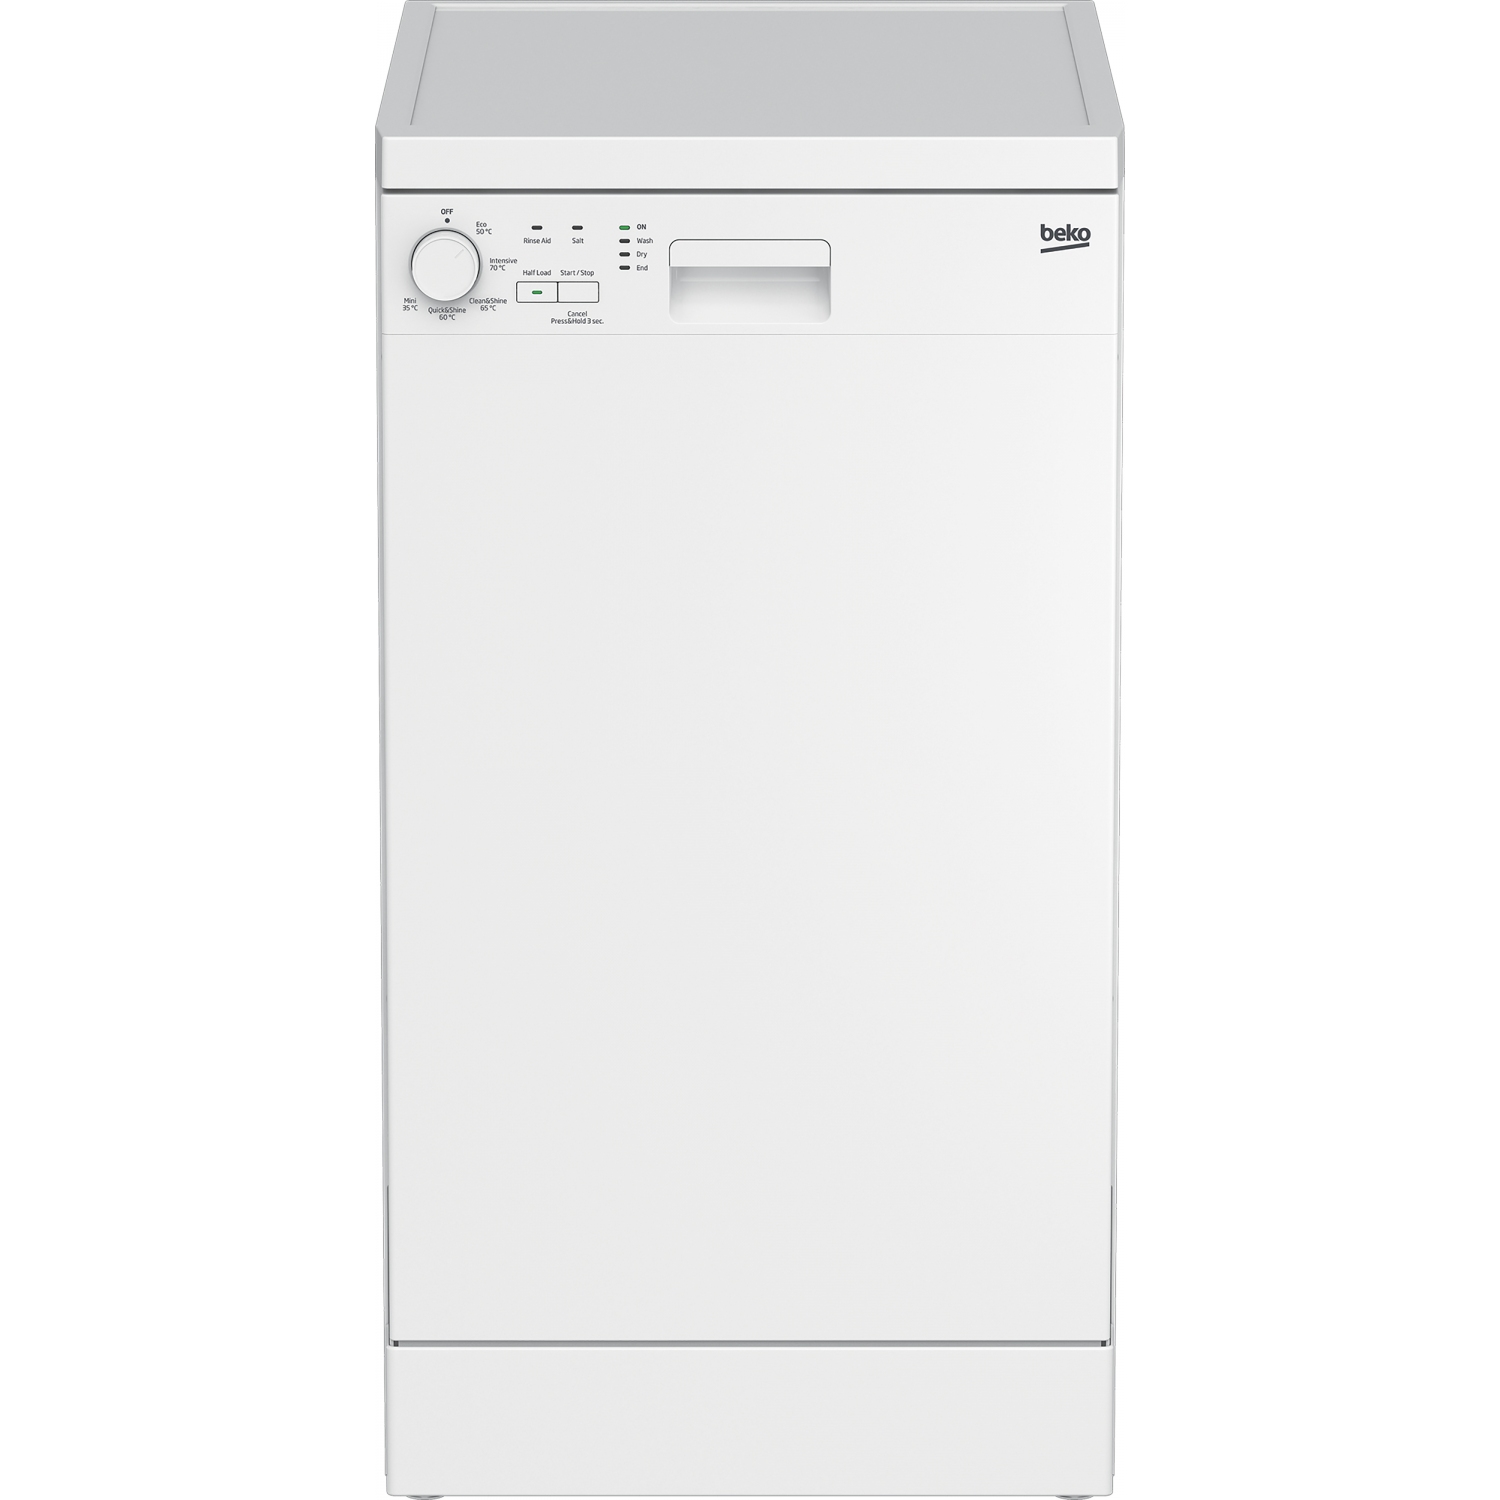 Beko DFS05020W Slimline Dishwasher - White - 10 Settings - 0